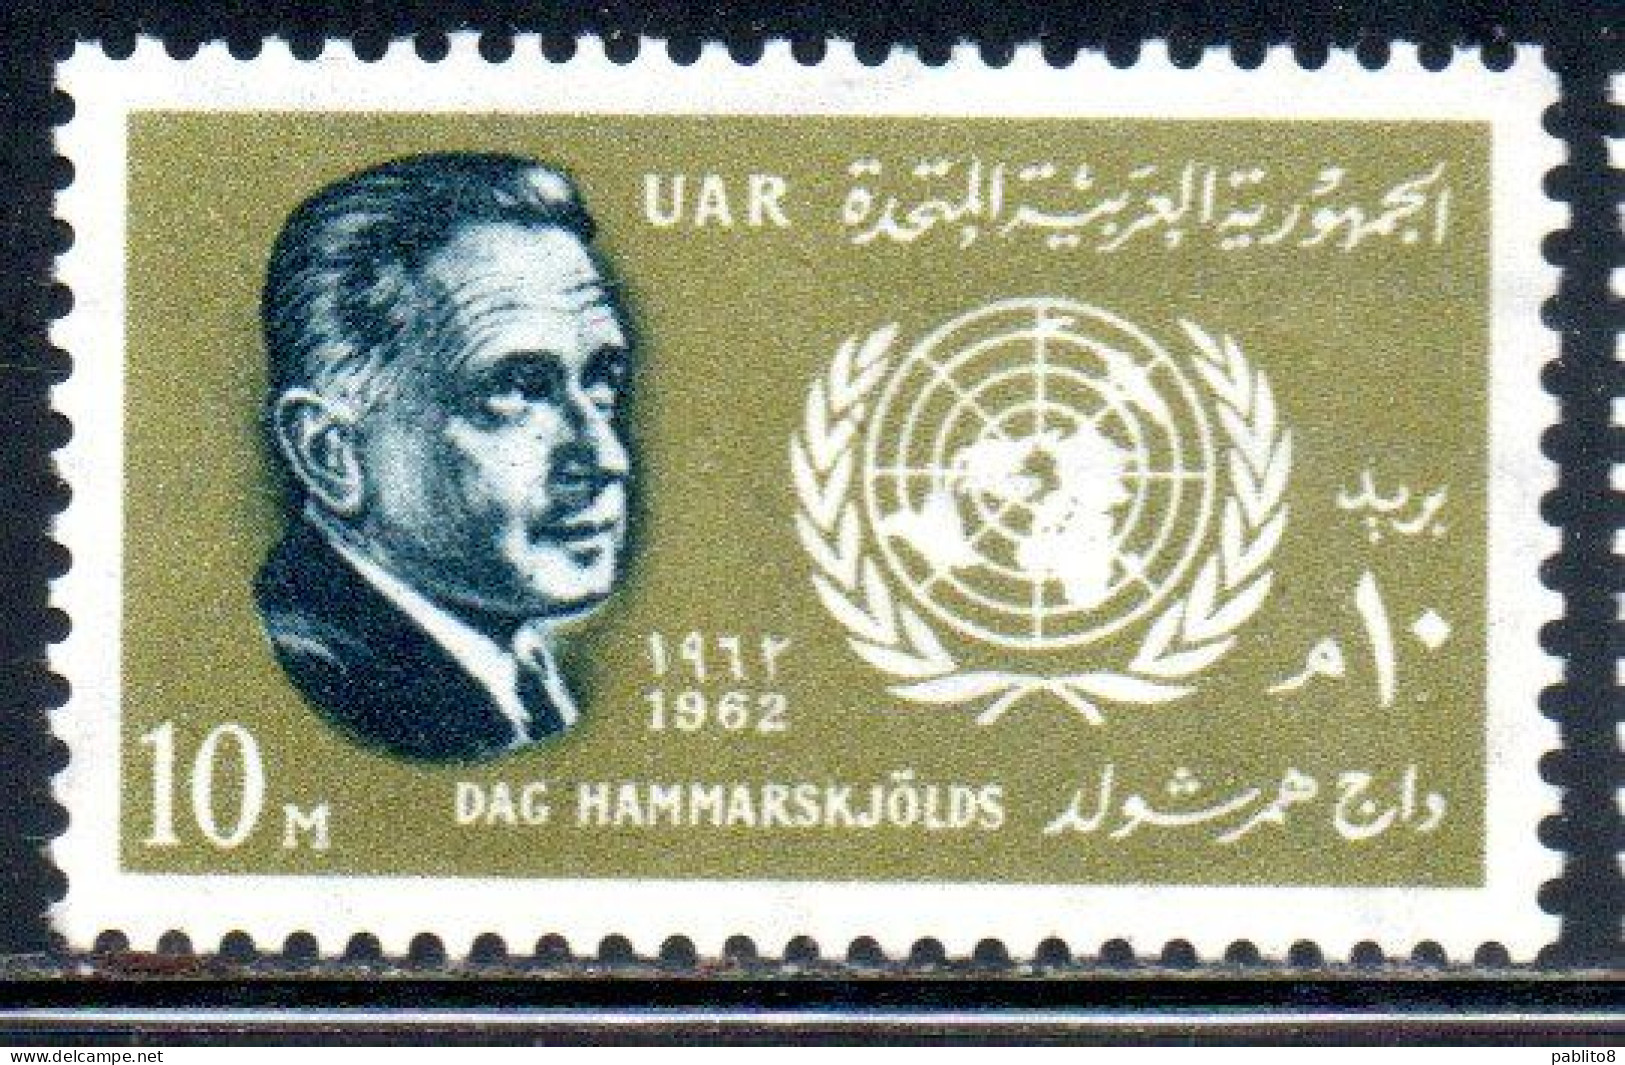 UAR EGYPT EGITTO 1962 DAG HAMMARSKJOLD SECRETARY GENERAL OF THE UN ONU 10m MNH - Ongebruikt